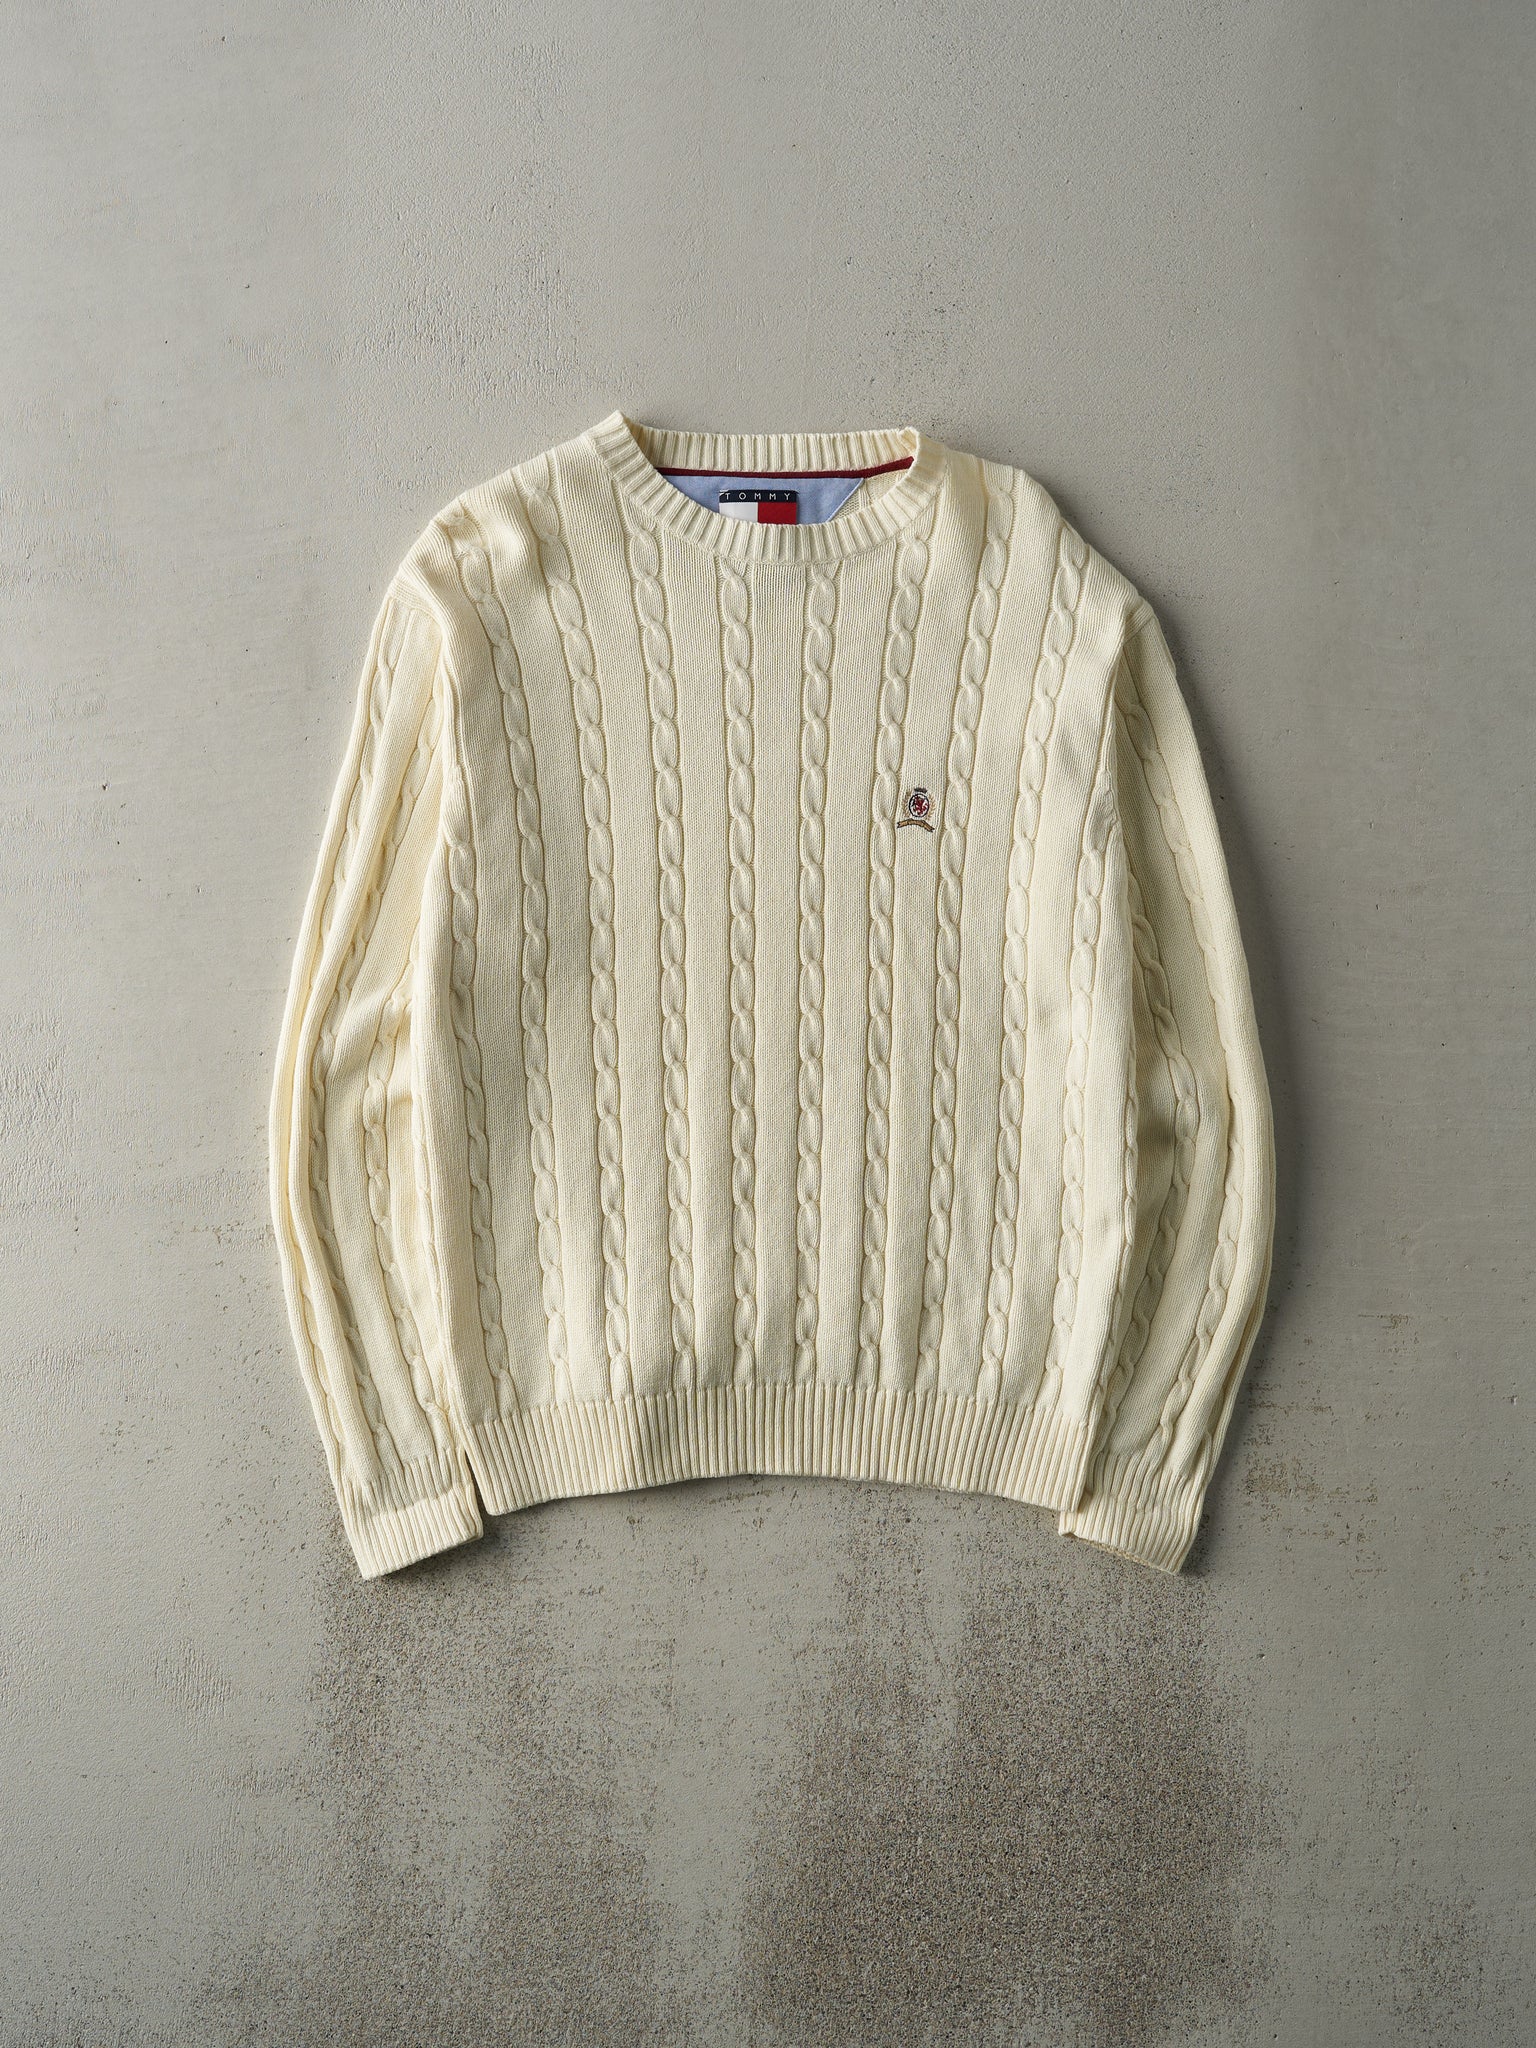 Vintage 90s Beige Tommy Hilfiger Cable Knit Sweater (M)